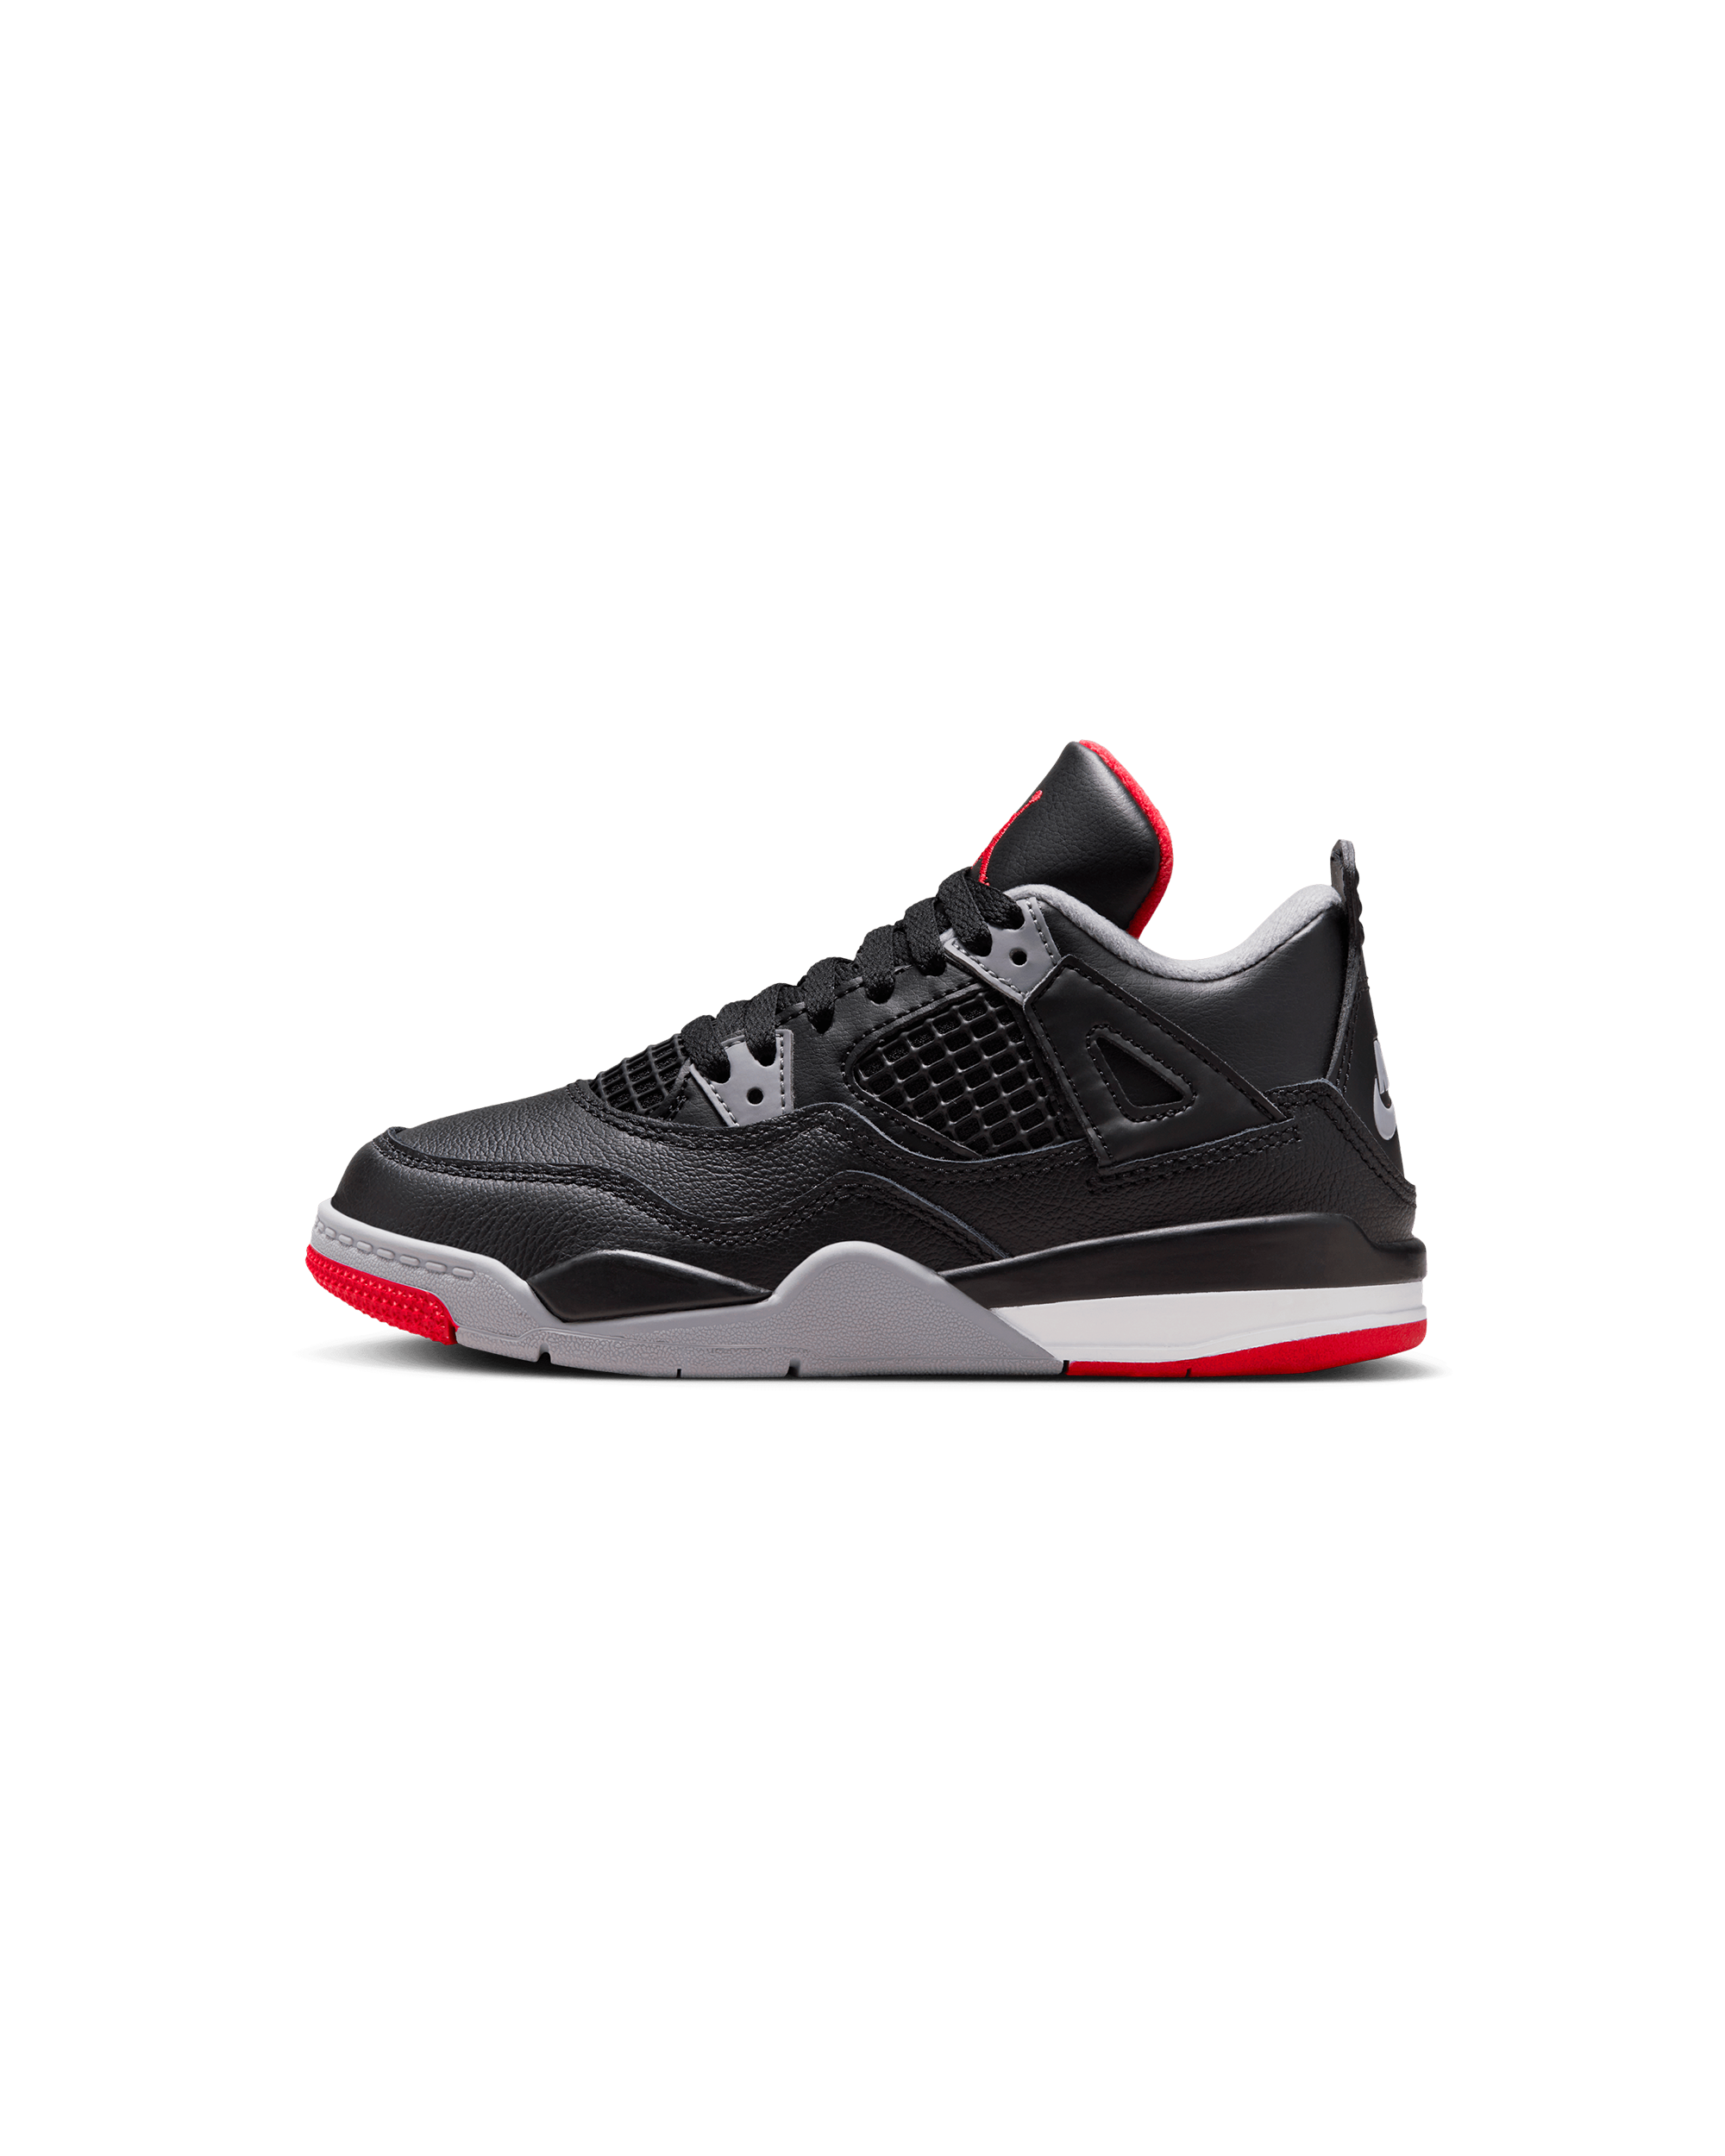 Air Jordan 4 Retro "Bred Reimagined" (PS) - Black / Fire Red / Grey / White